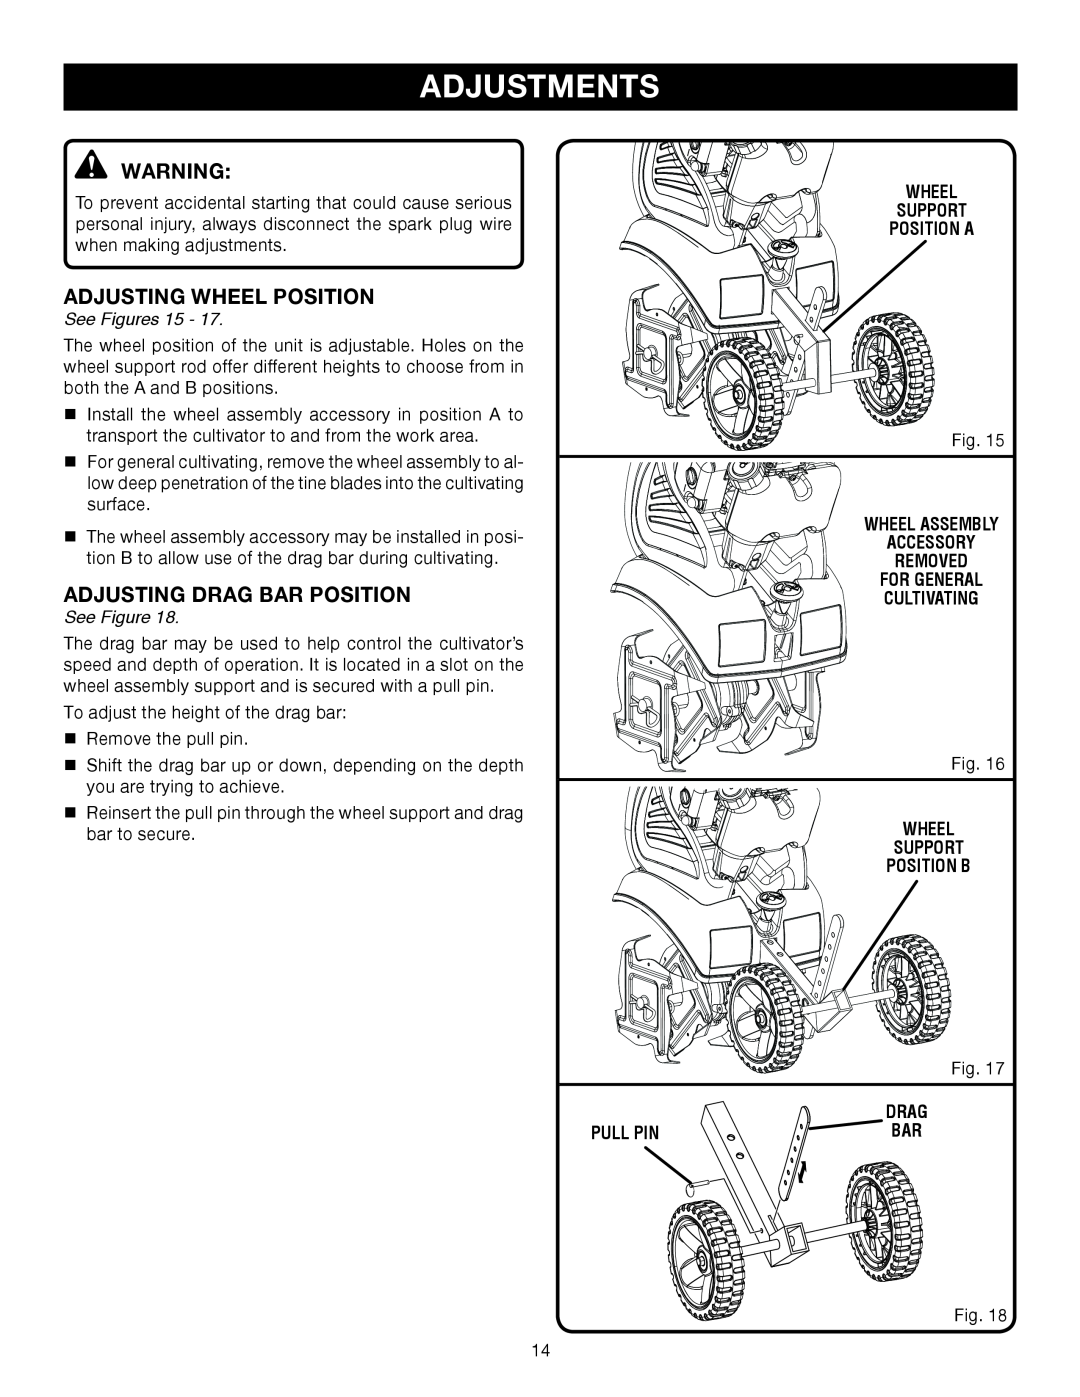 Ryobi Outdoor RY60511A manual Adjustments, Adjusting Wheel Position, Adjusting Drag Bar Position, See Figures 15, Pull Pin 